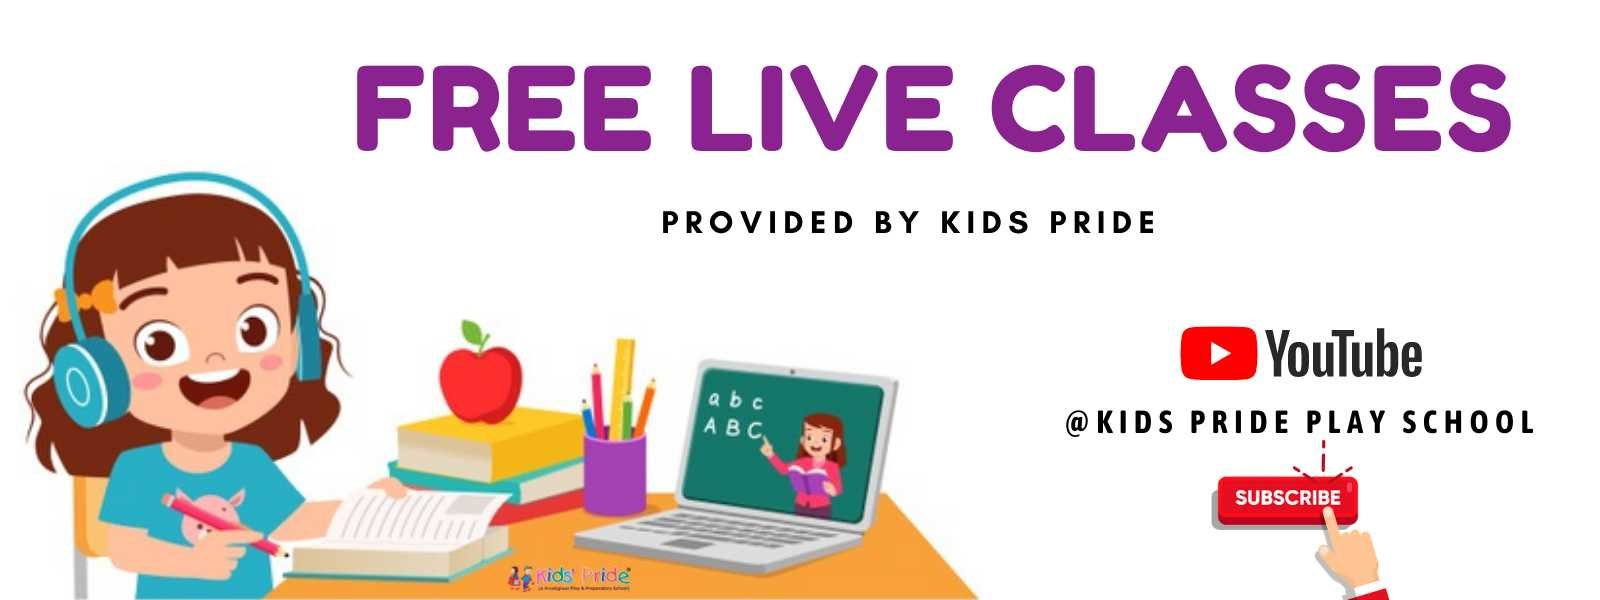 free live classes by kids pride school